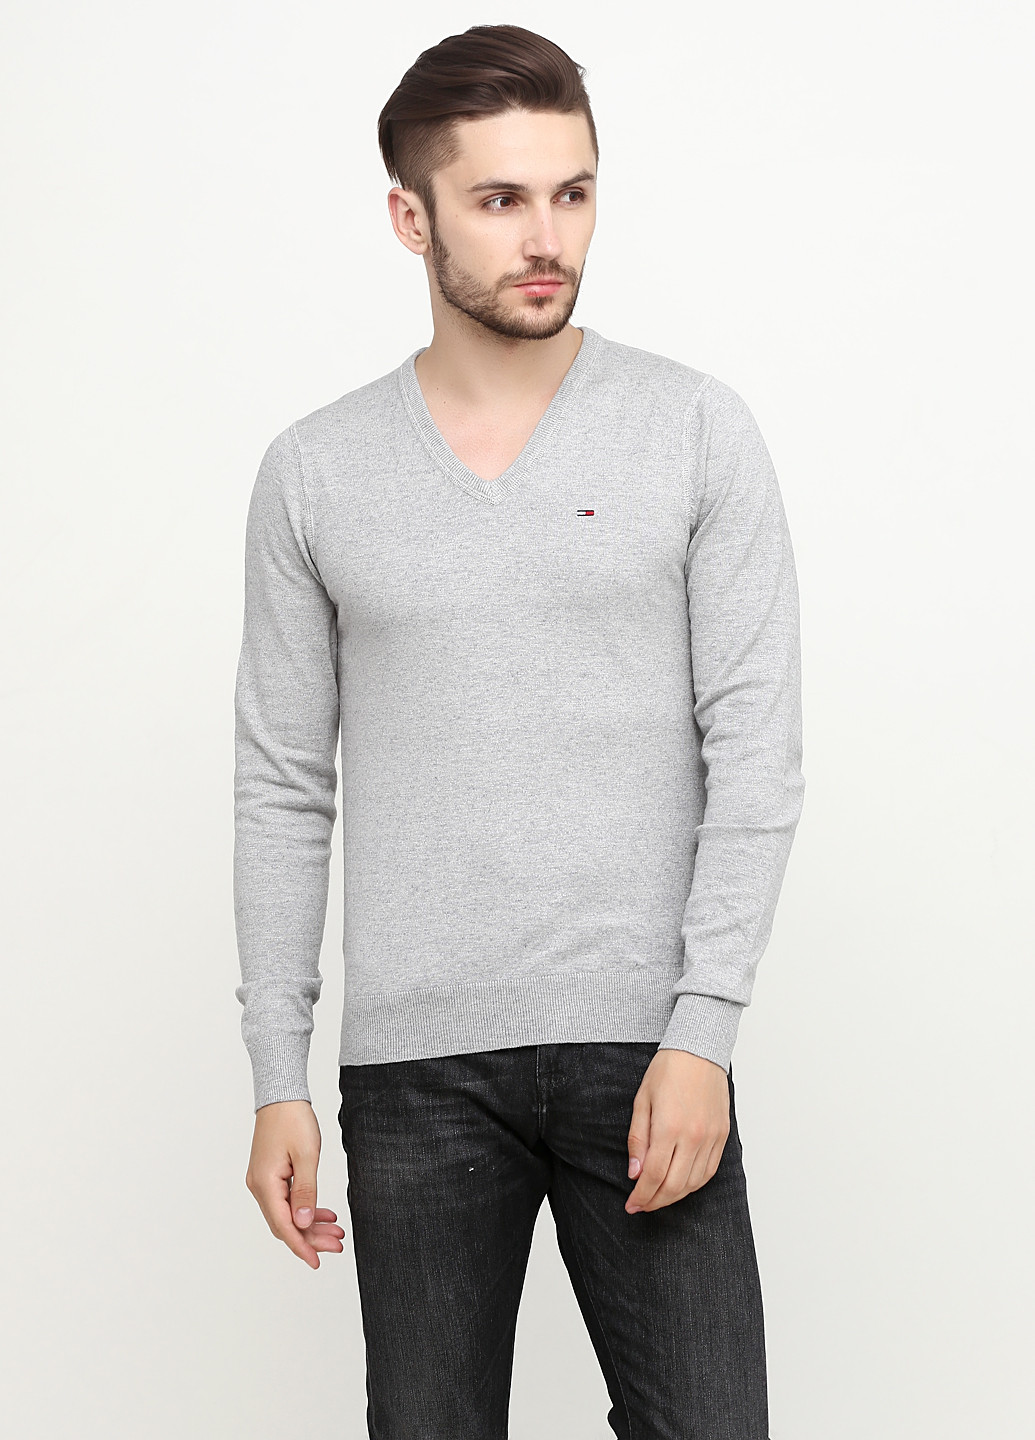 Светло-серый демисезонный пуловер пуловер Tommy Hilfiger